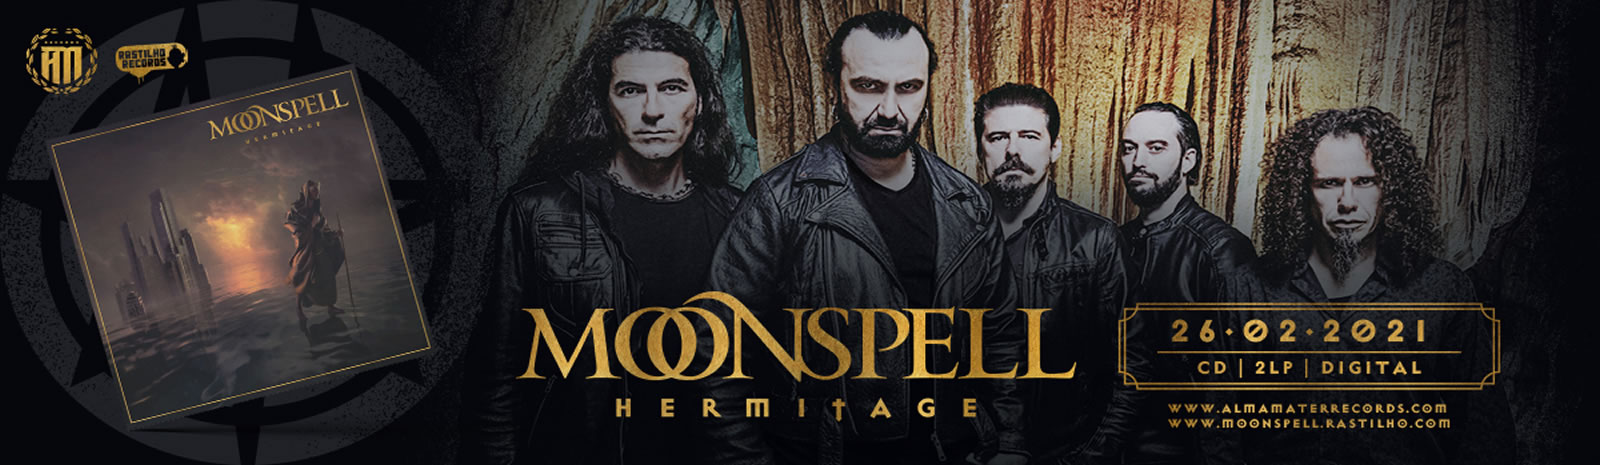 Moonspell "Hermitage" Banner